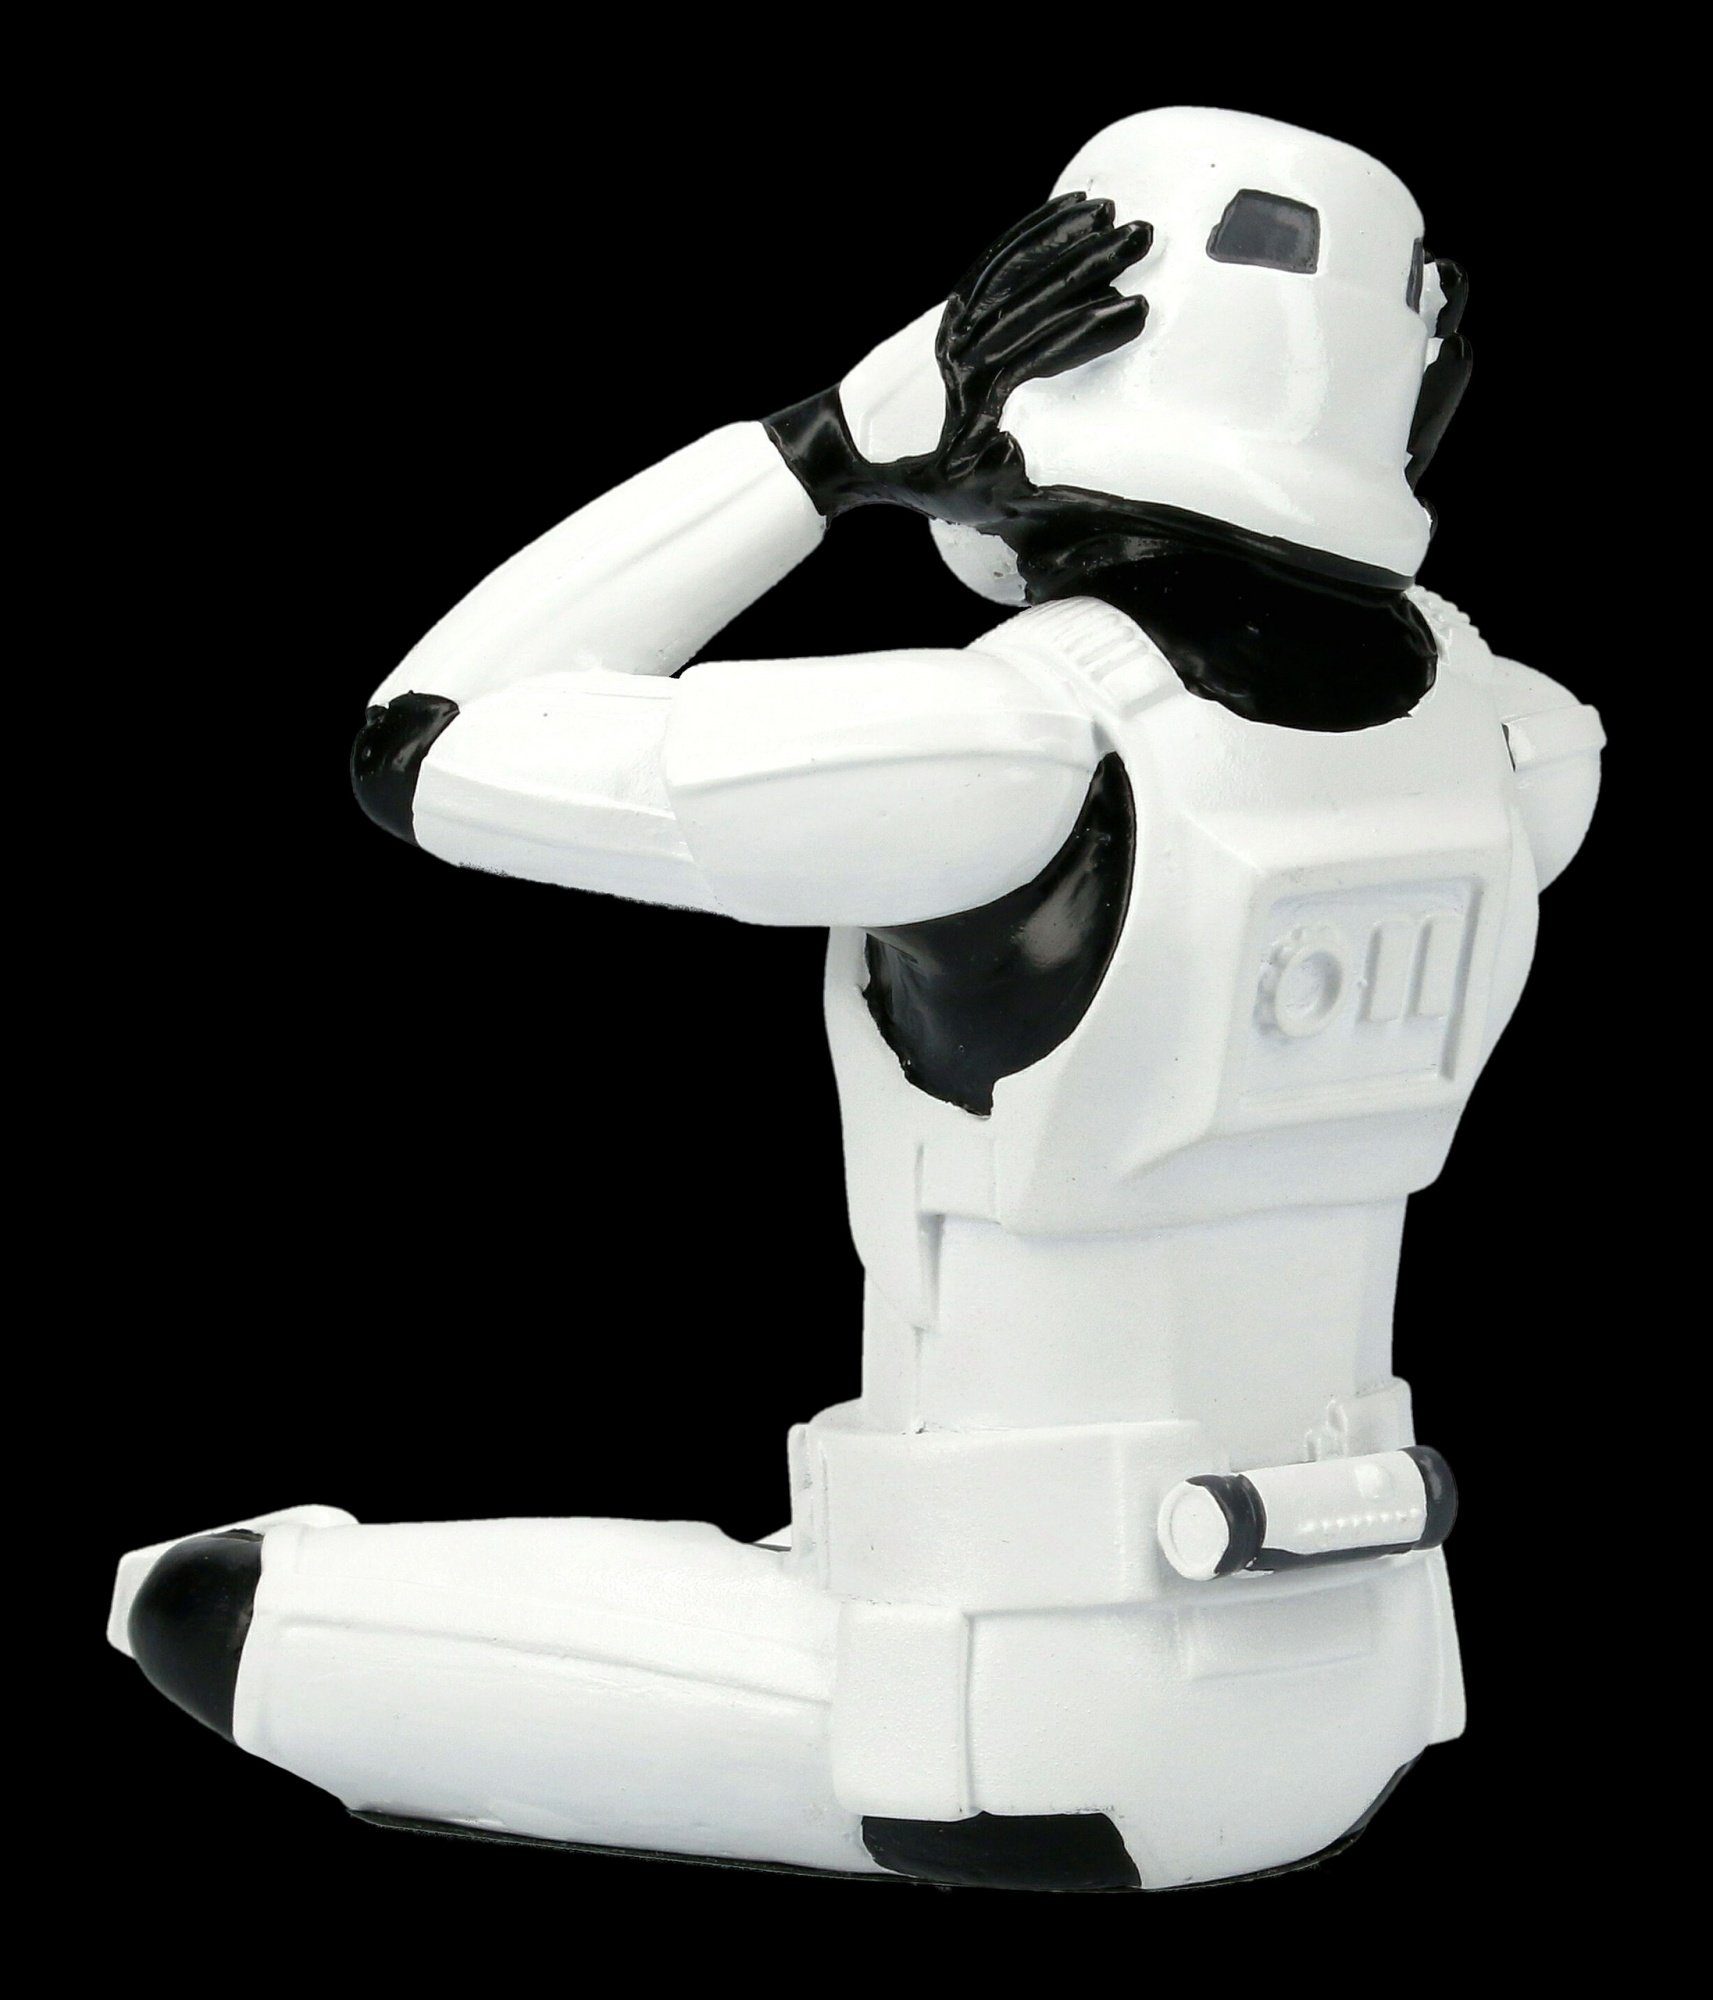 Dekofigur offizielles - hören Figuren Stormtrooper Merchandise böses - Shop Nichts GmbH Figur